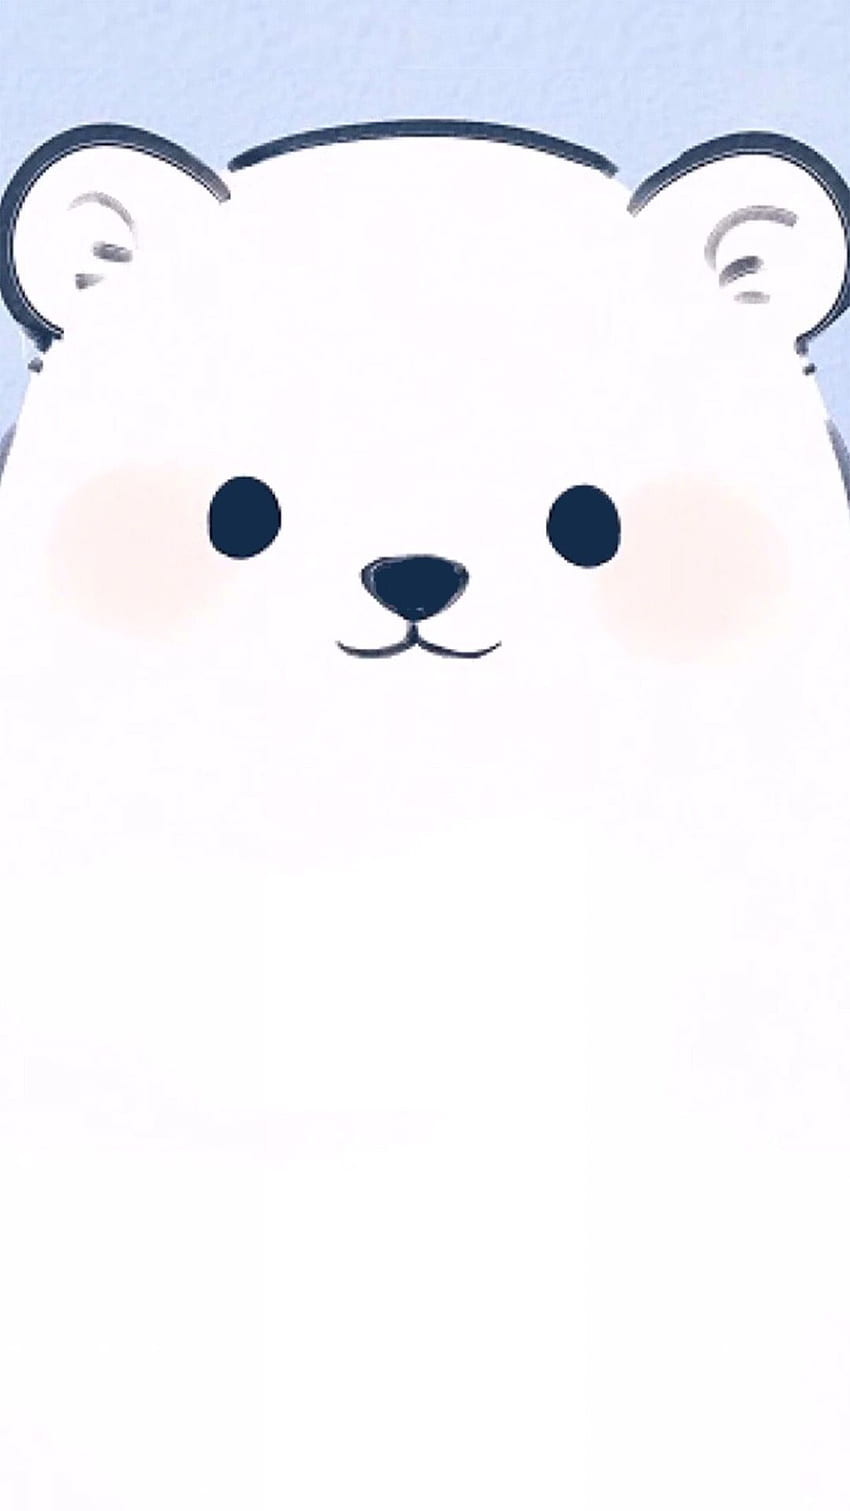 Crunchyroll - That feeling... Anime: Polar Bear Cafe | Facebook